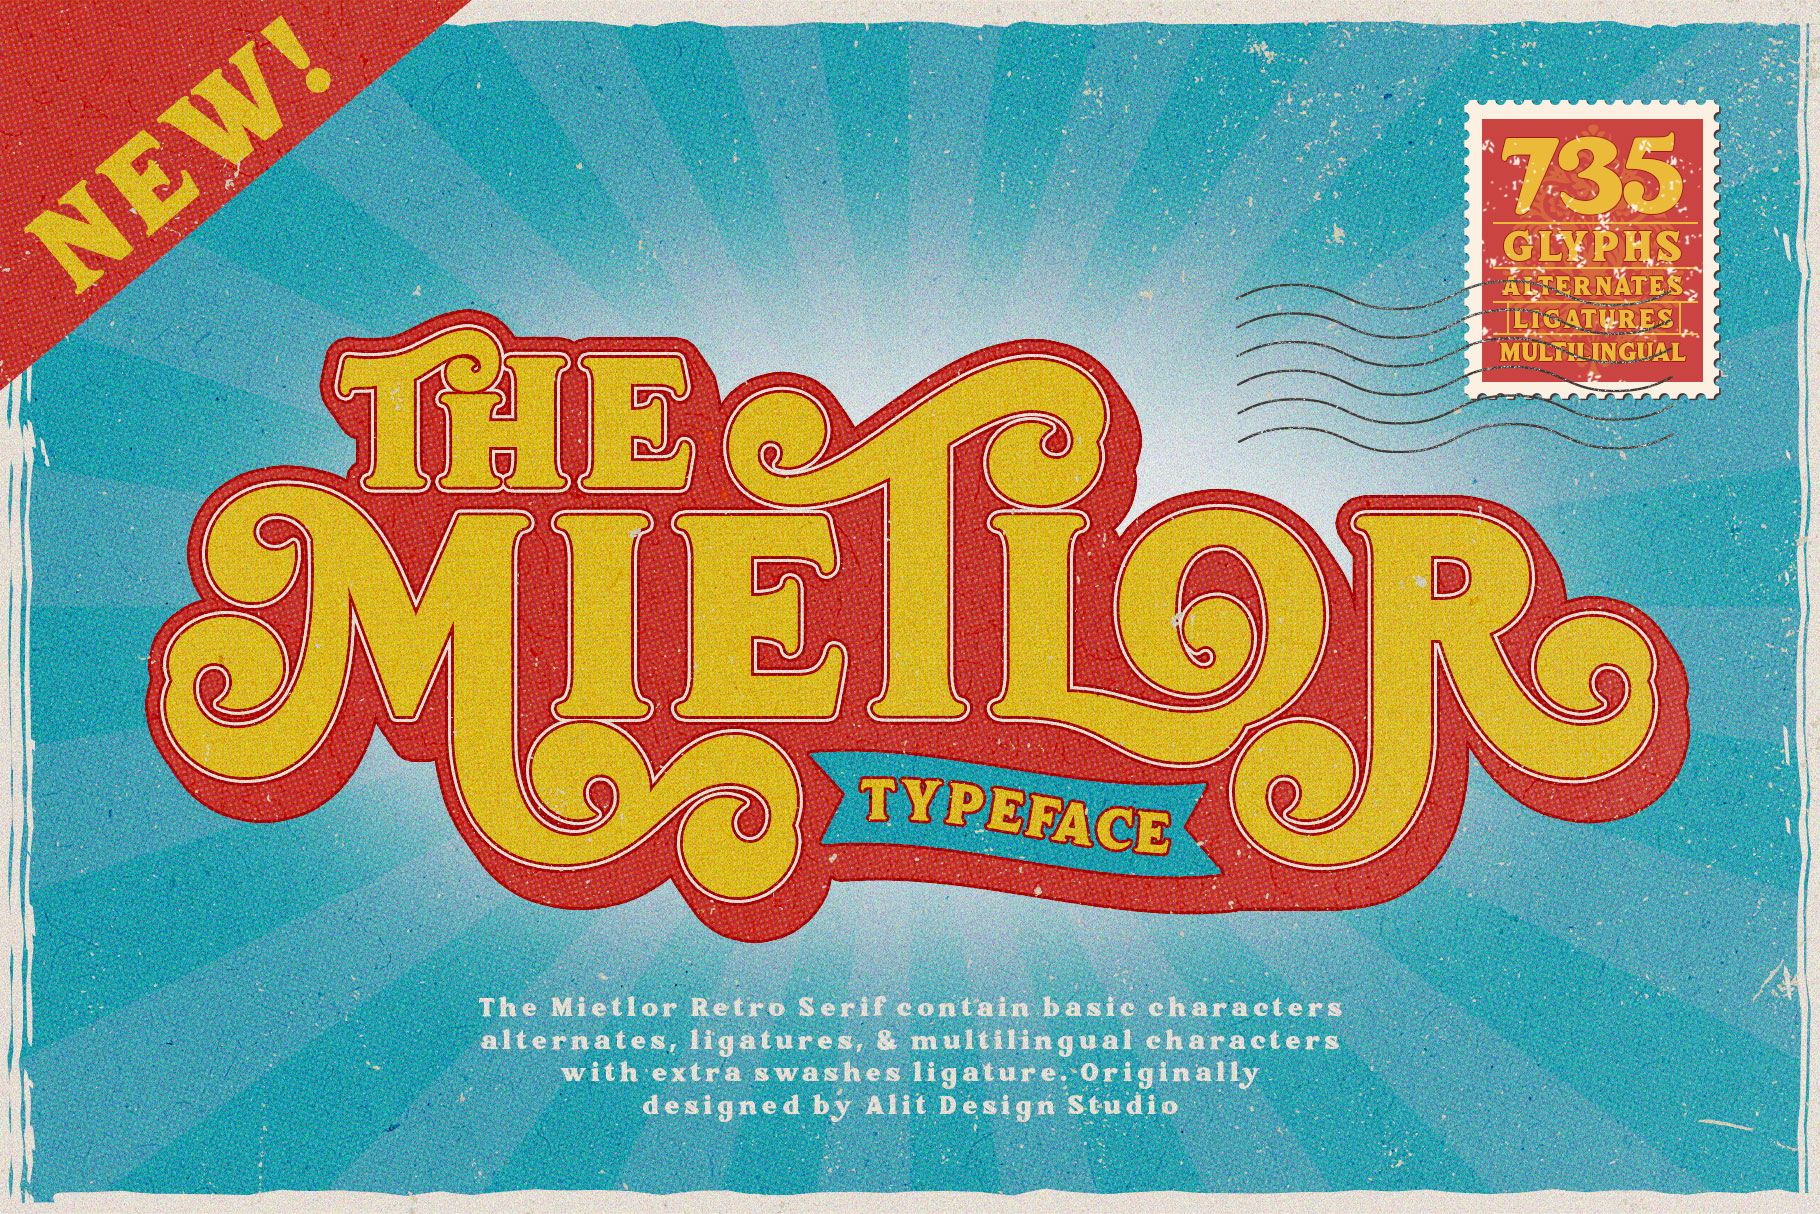 The mietlor free version